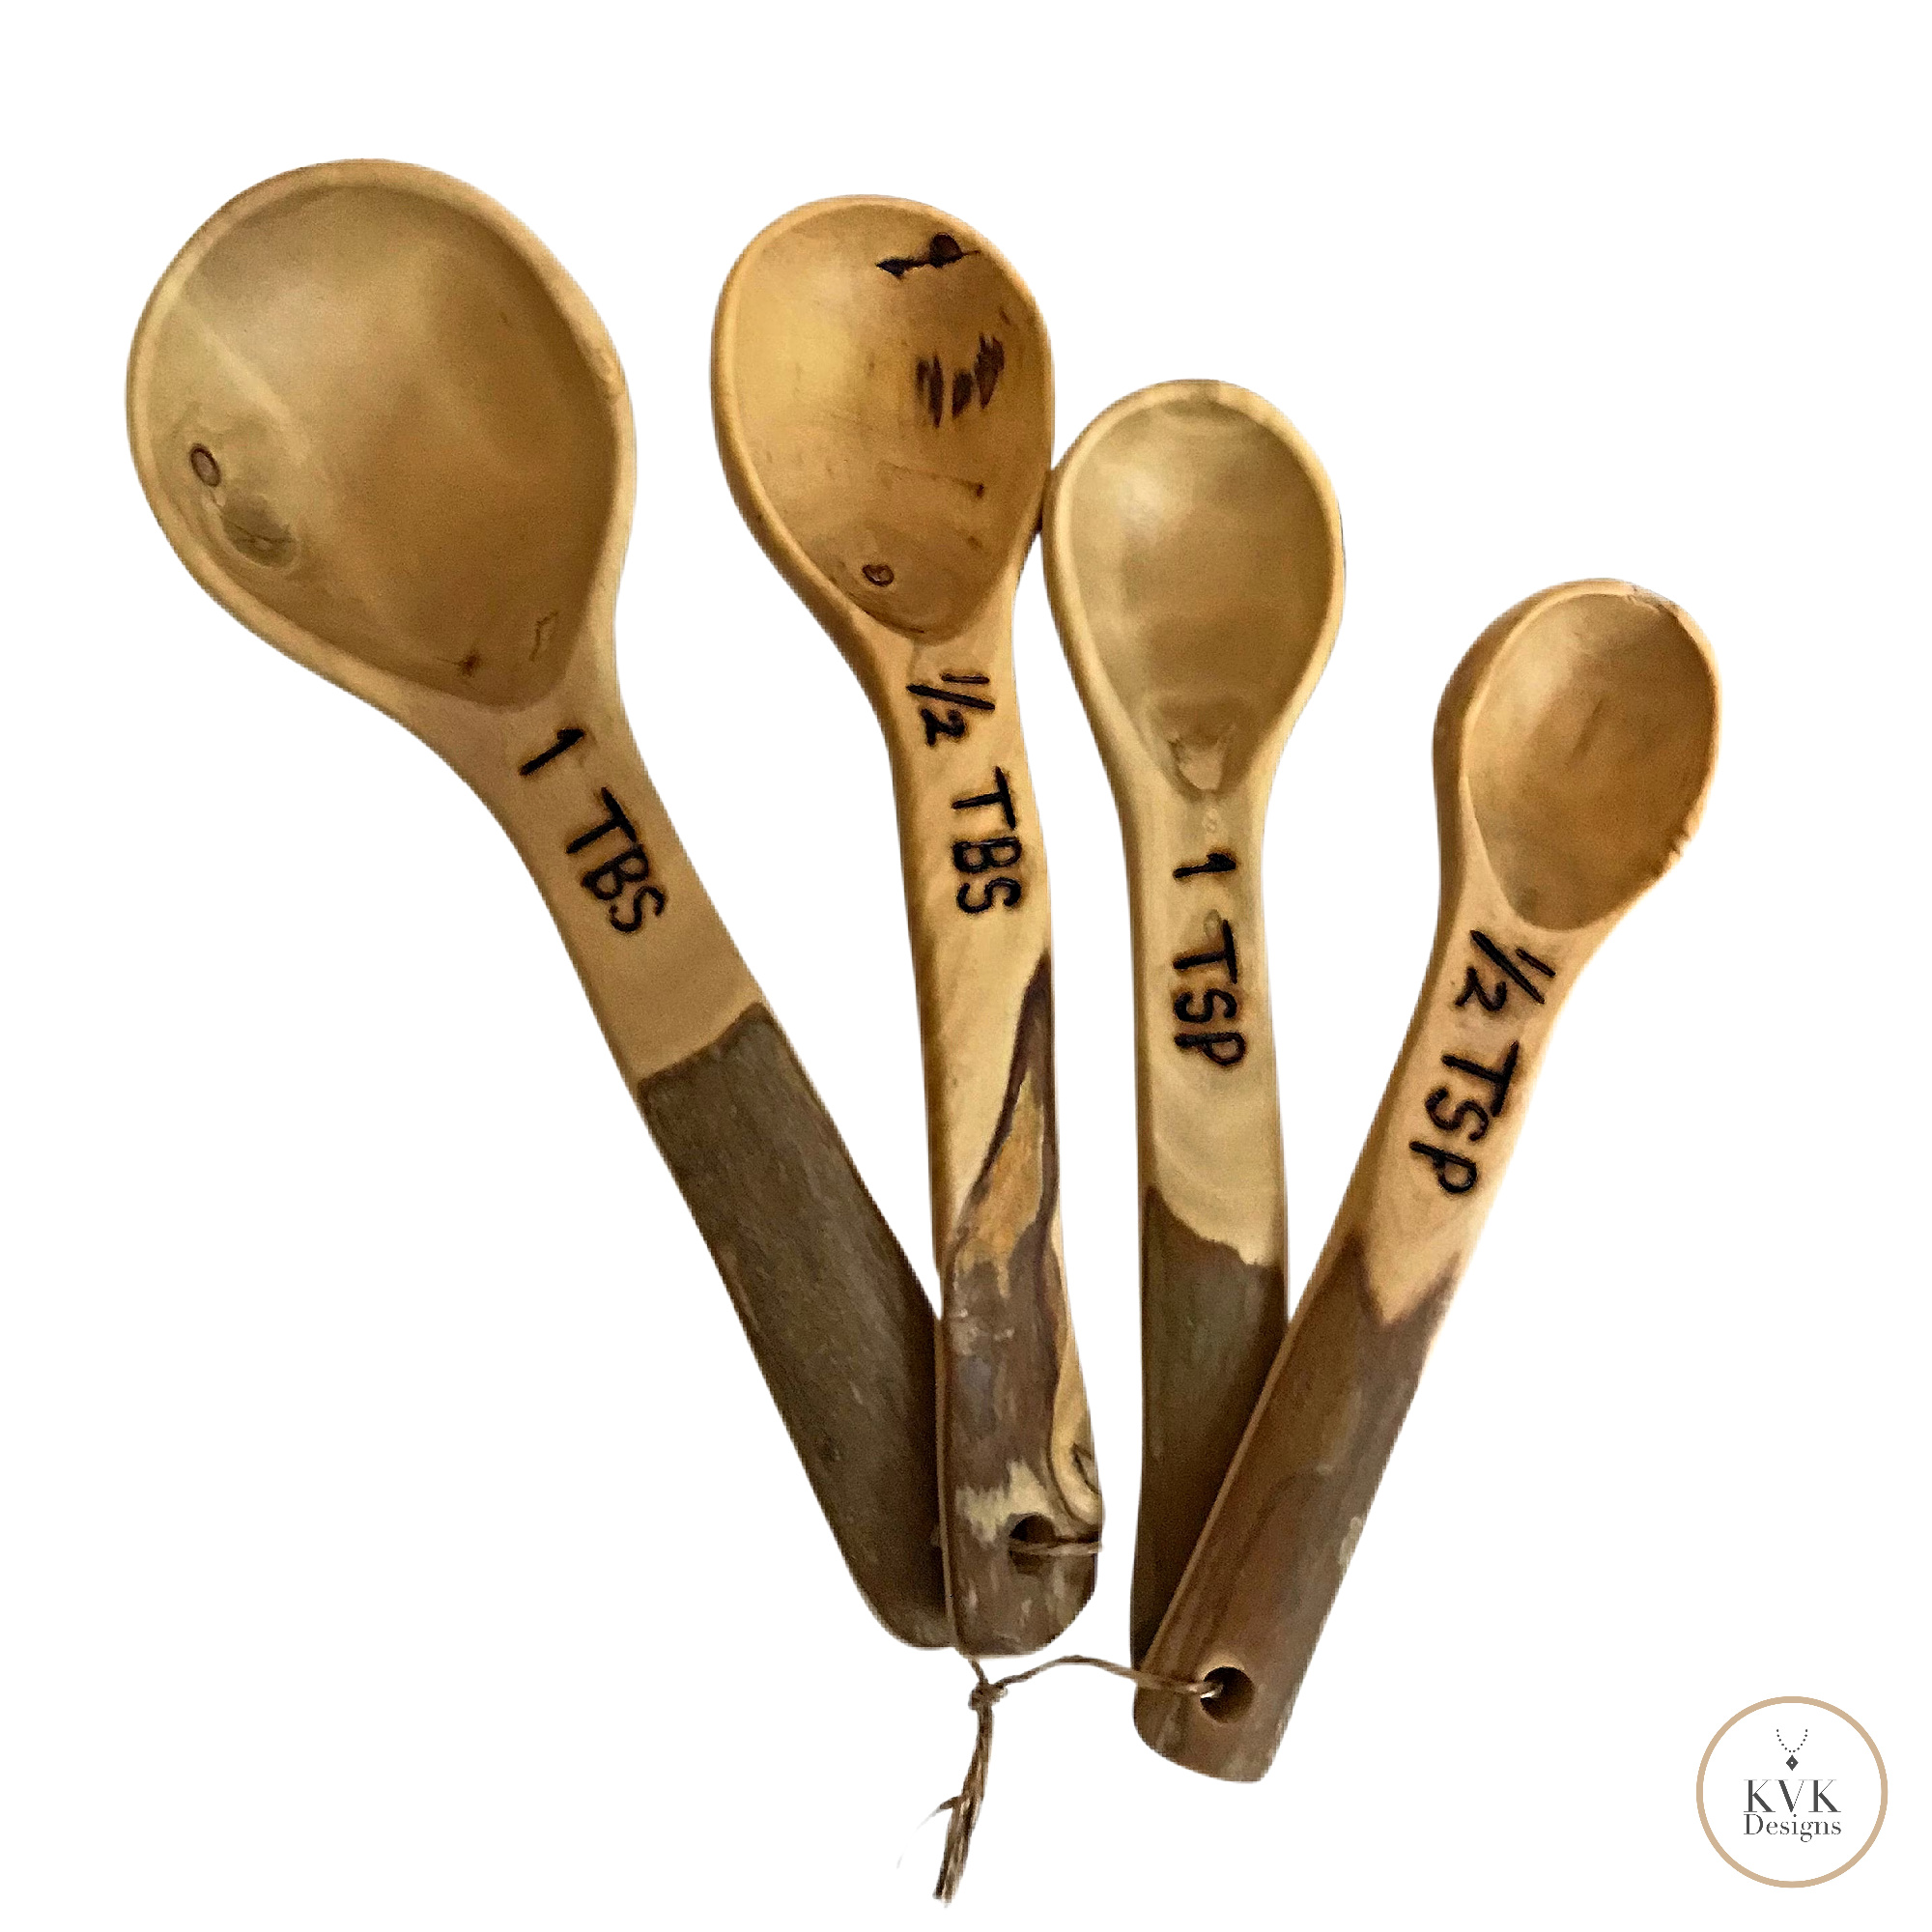 Original Wood Measuring Spoons